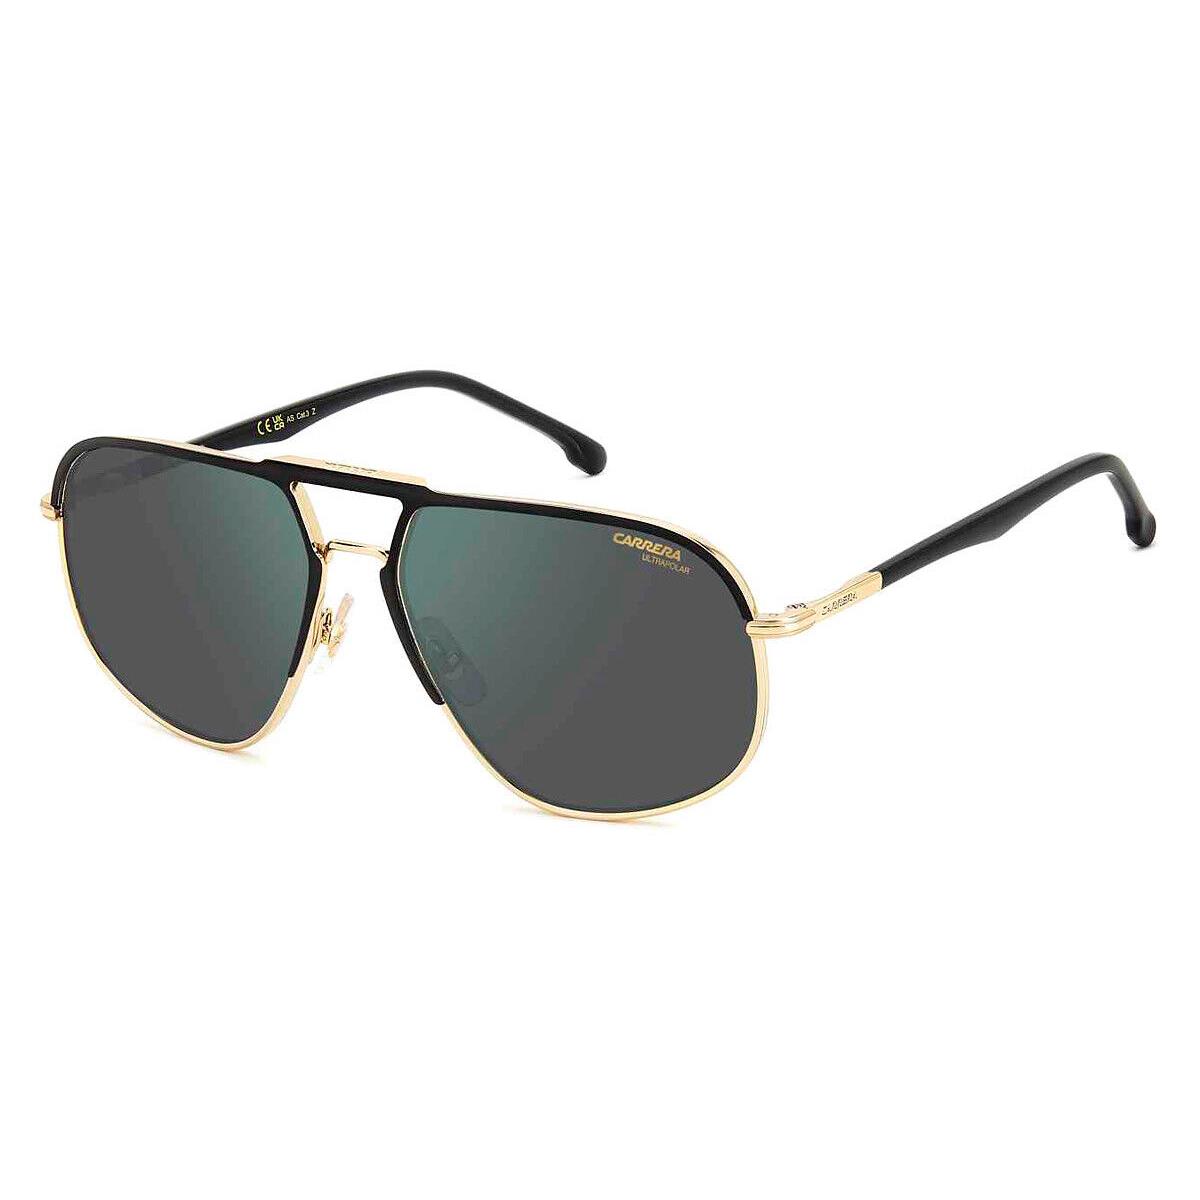 Carrera Car Sunglasses Black Gold / Green Gray Polarized HC AR